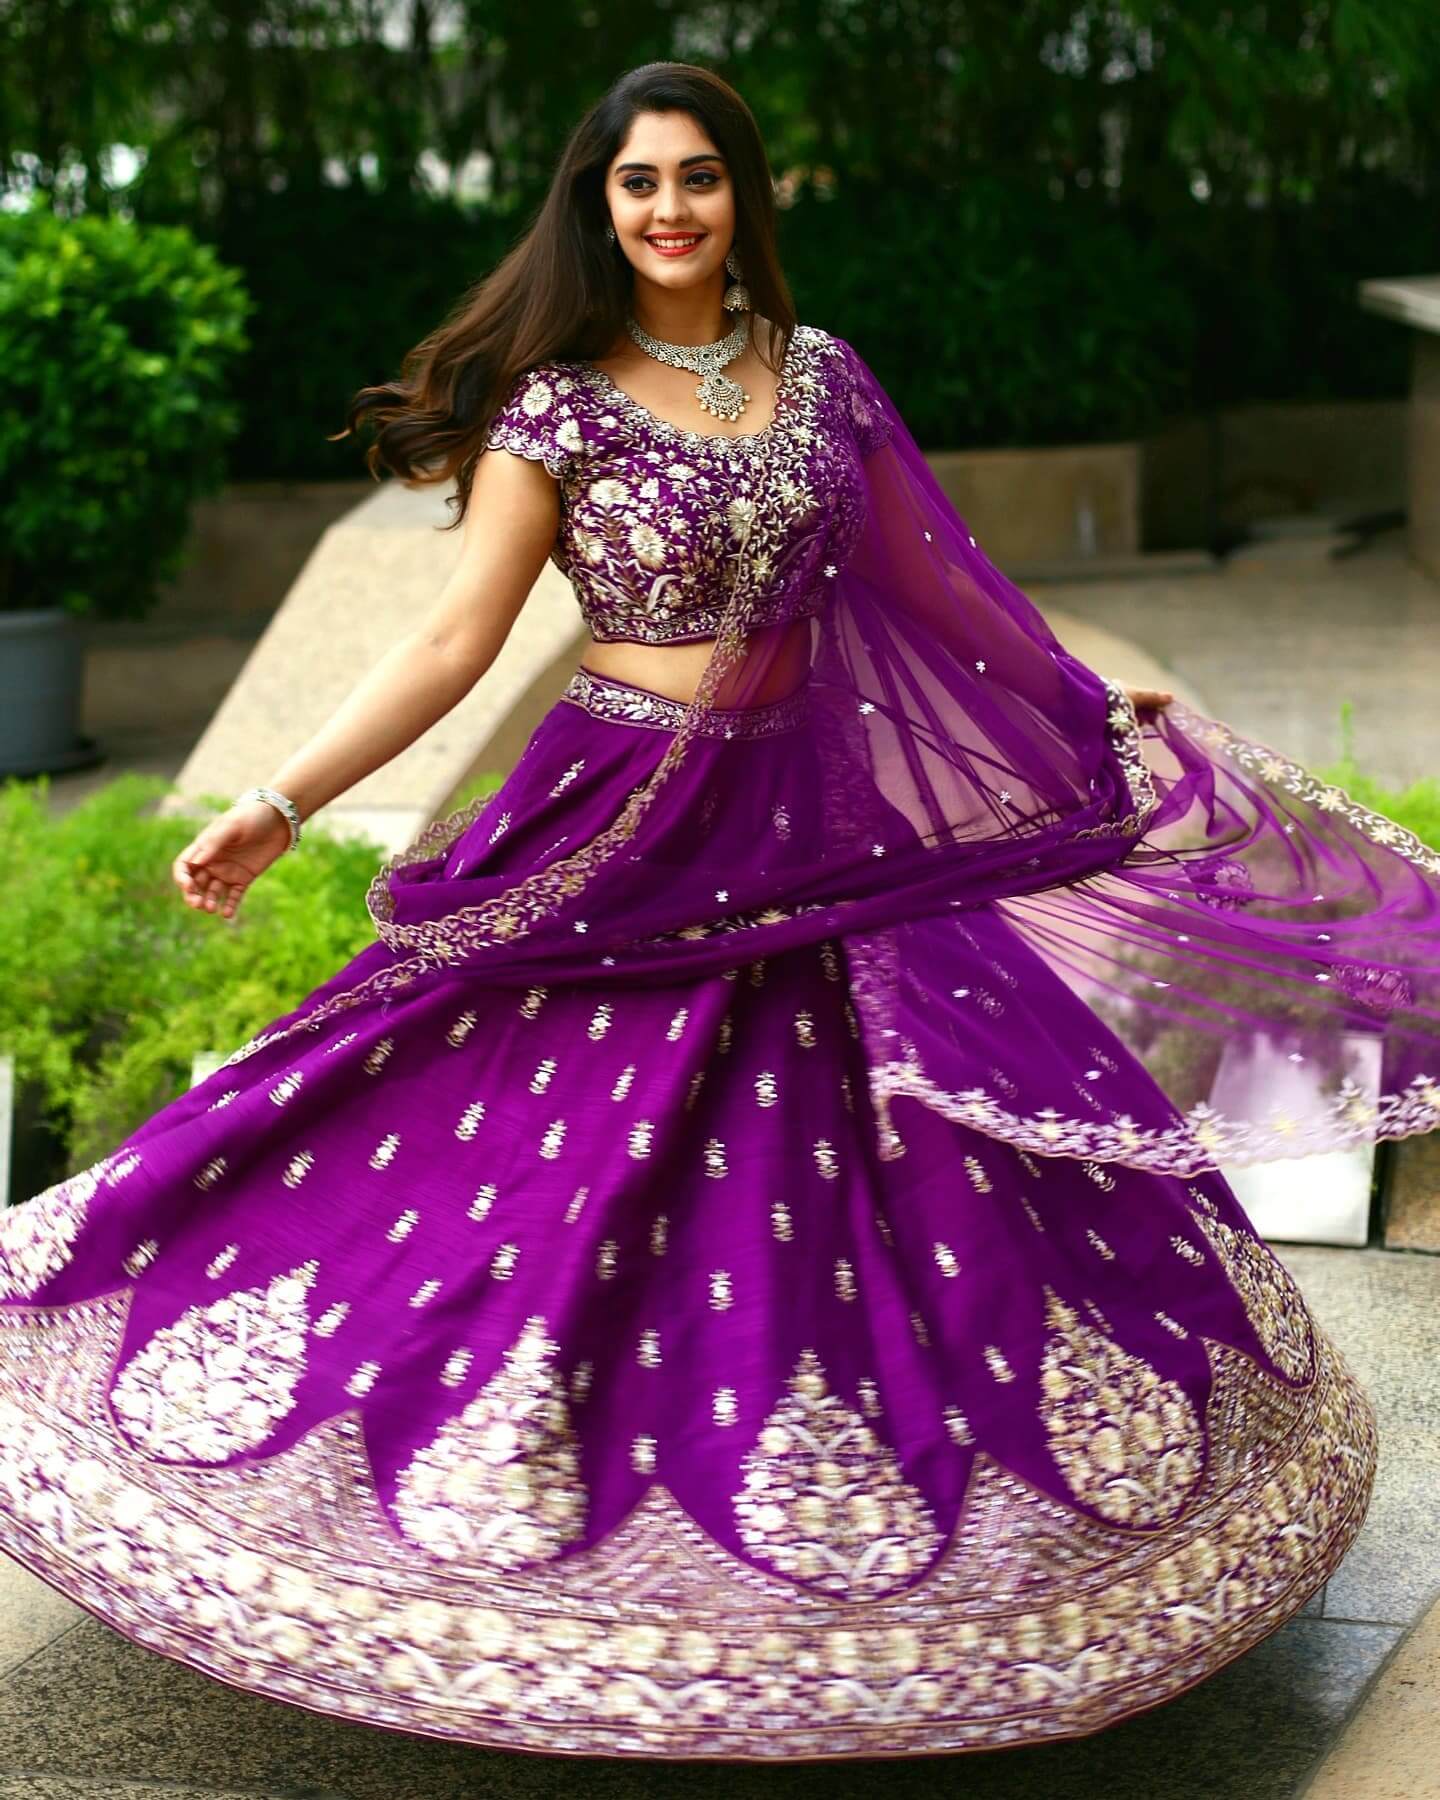 Surbhi Puranik Mesmerizing Lovely Outfits & Pretty Looks In Purple Lehenga